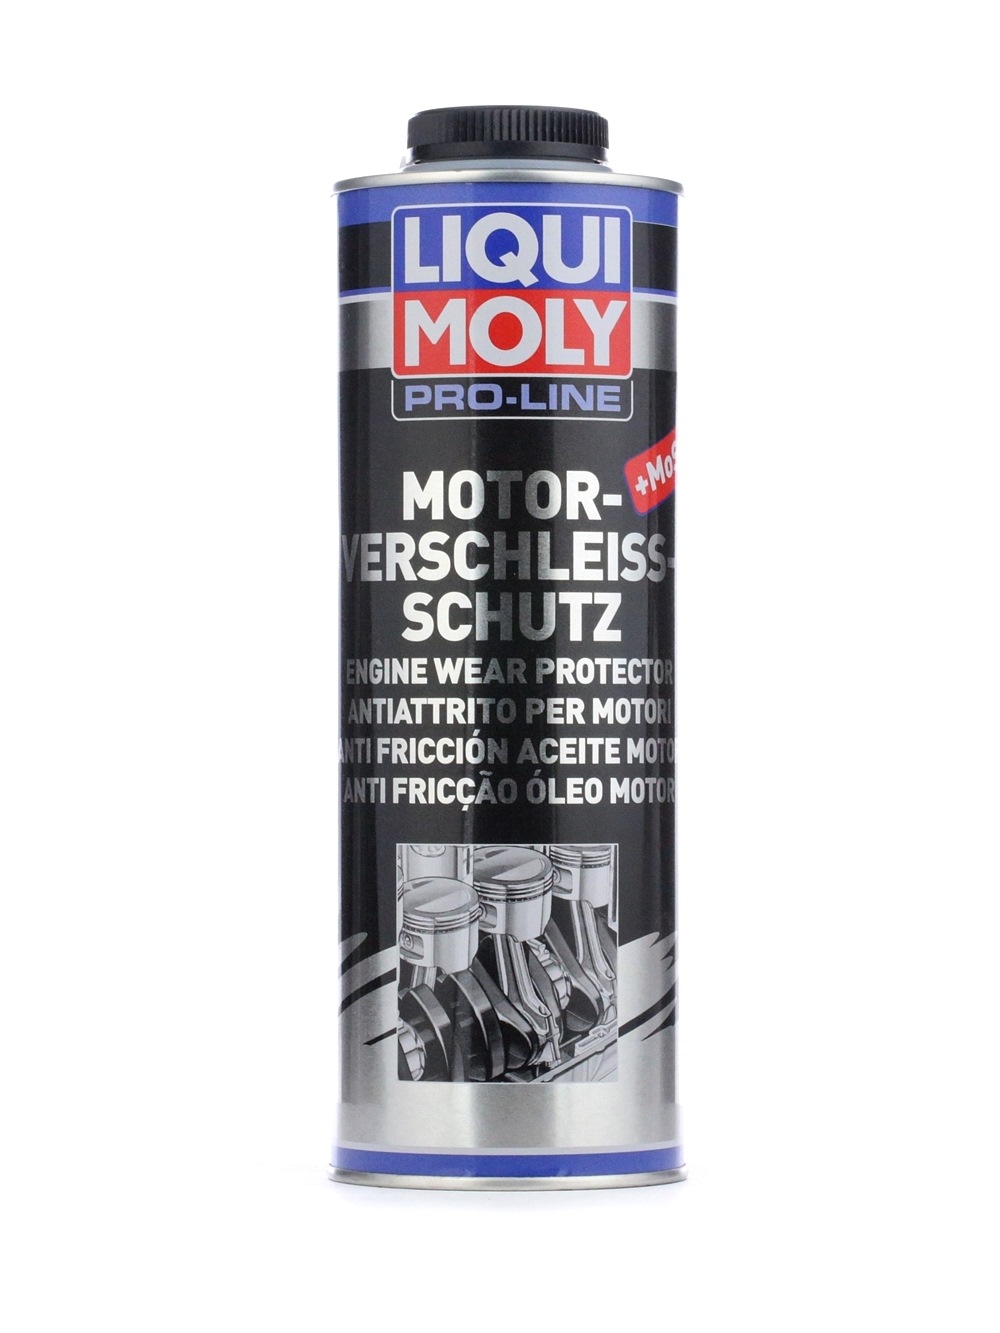 LIQUI MOLY Motoröladditiv  5197 P000069 von Liqui Moly